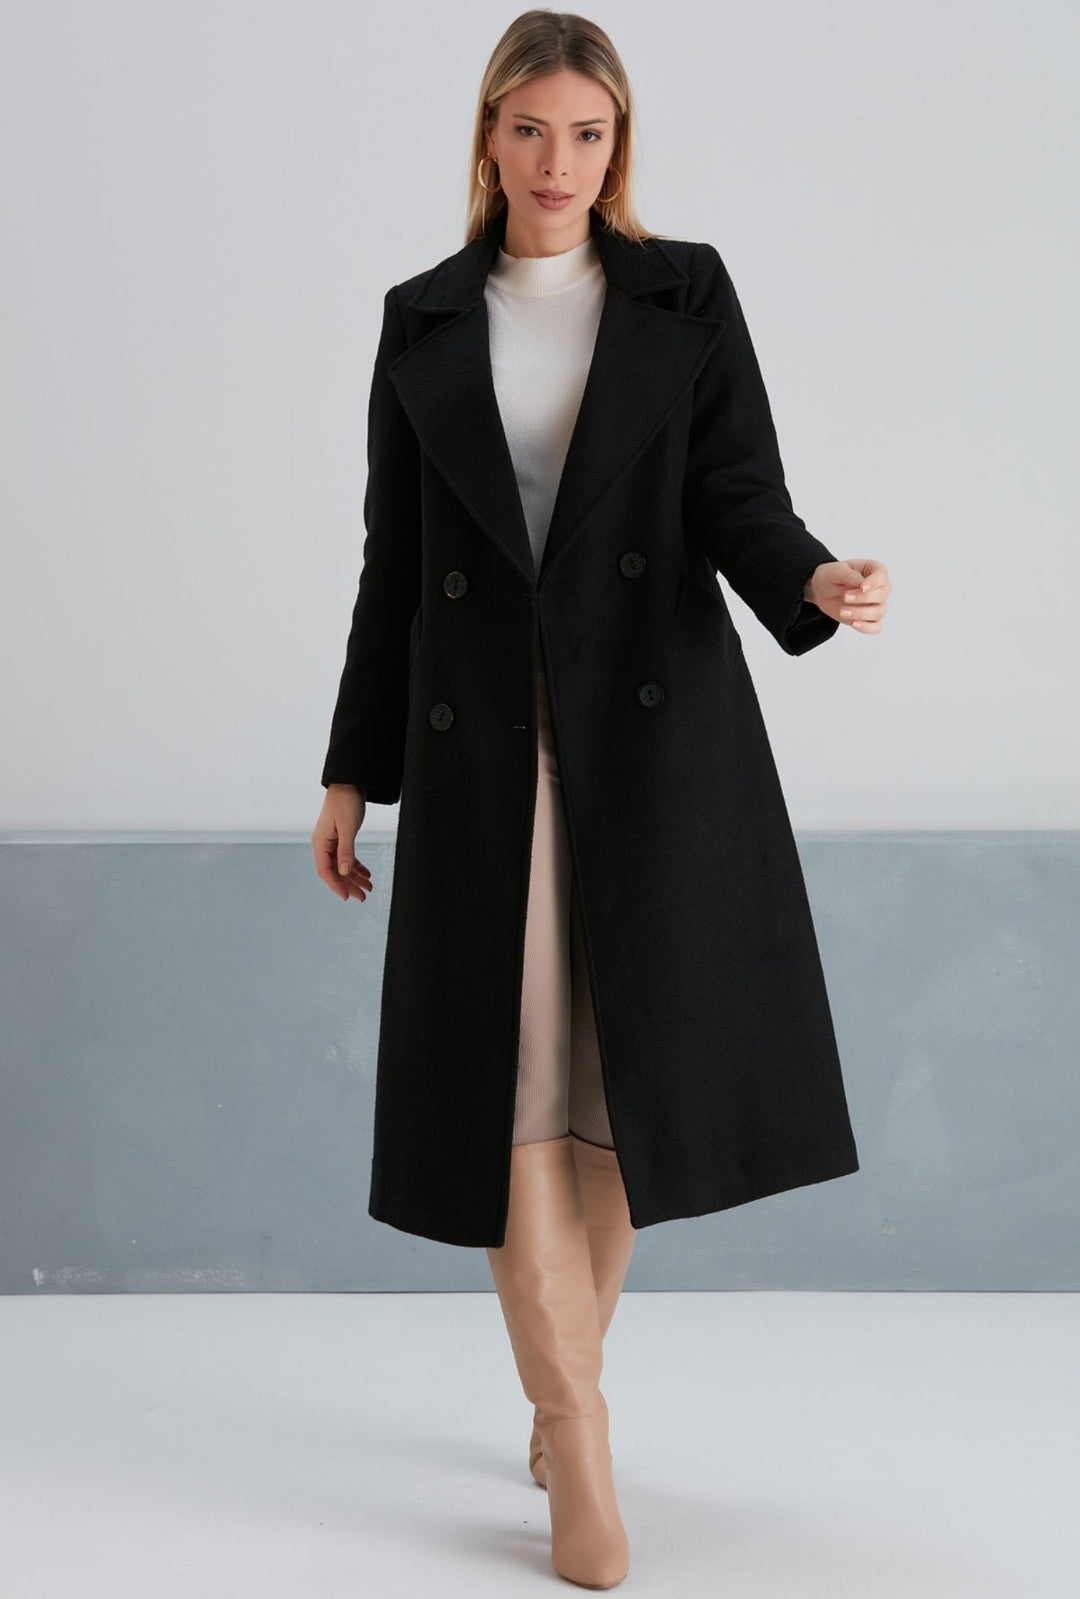 2023 Ladies Winter Coat New Fashion Black Color Long Parka Cool